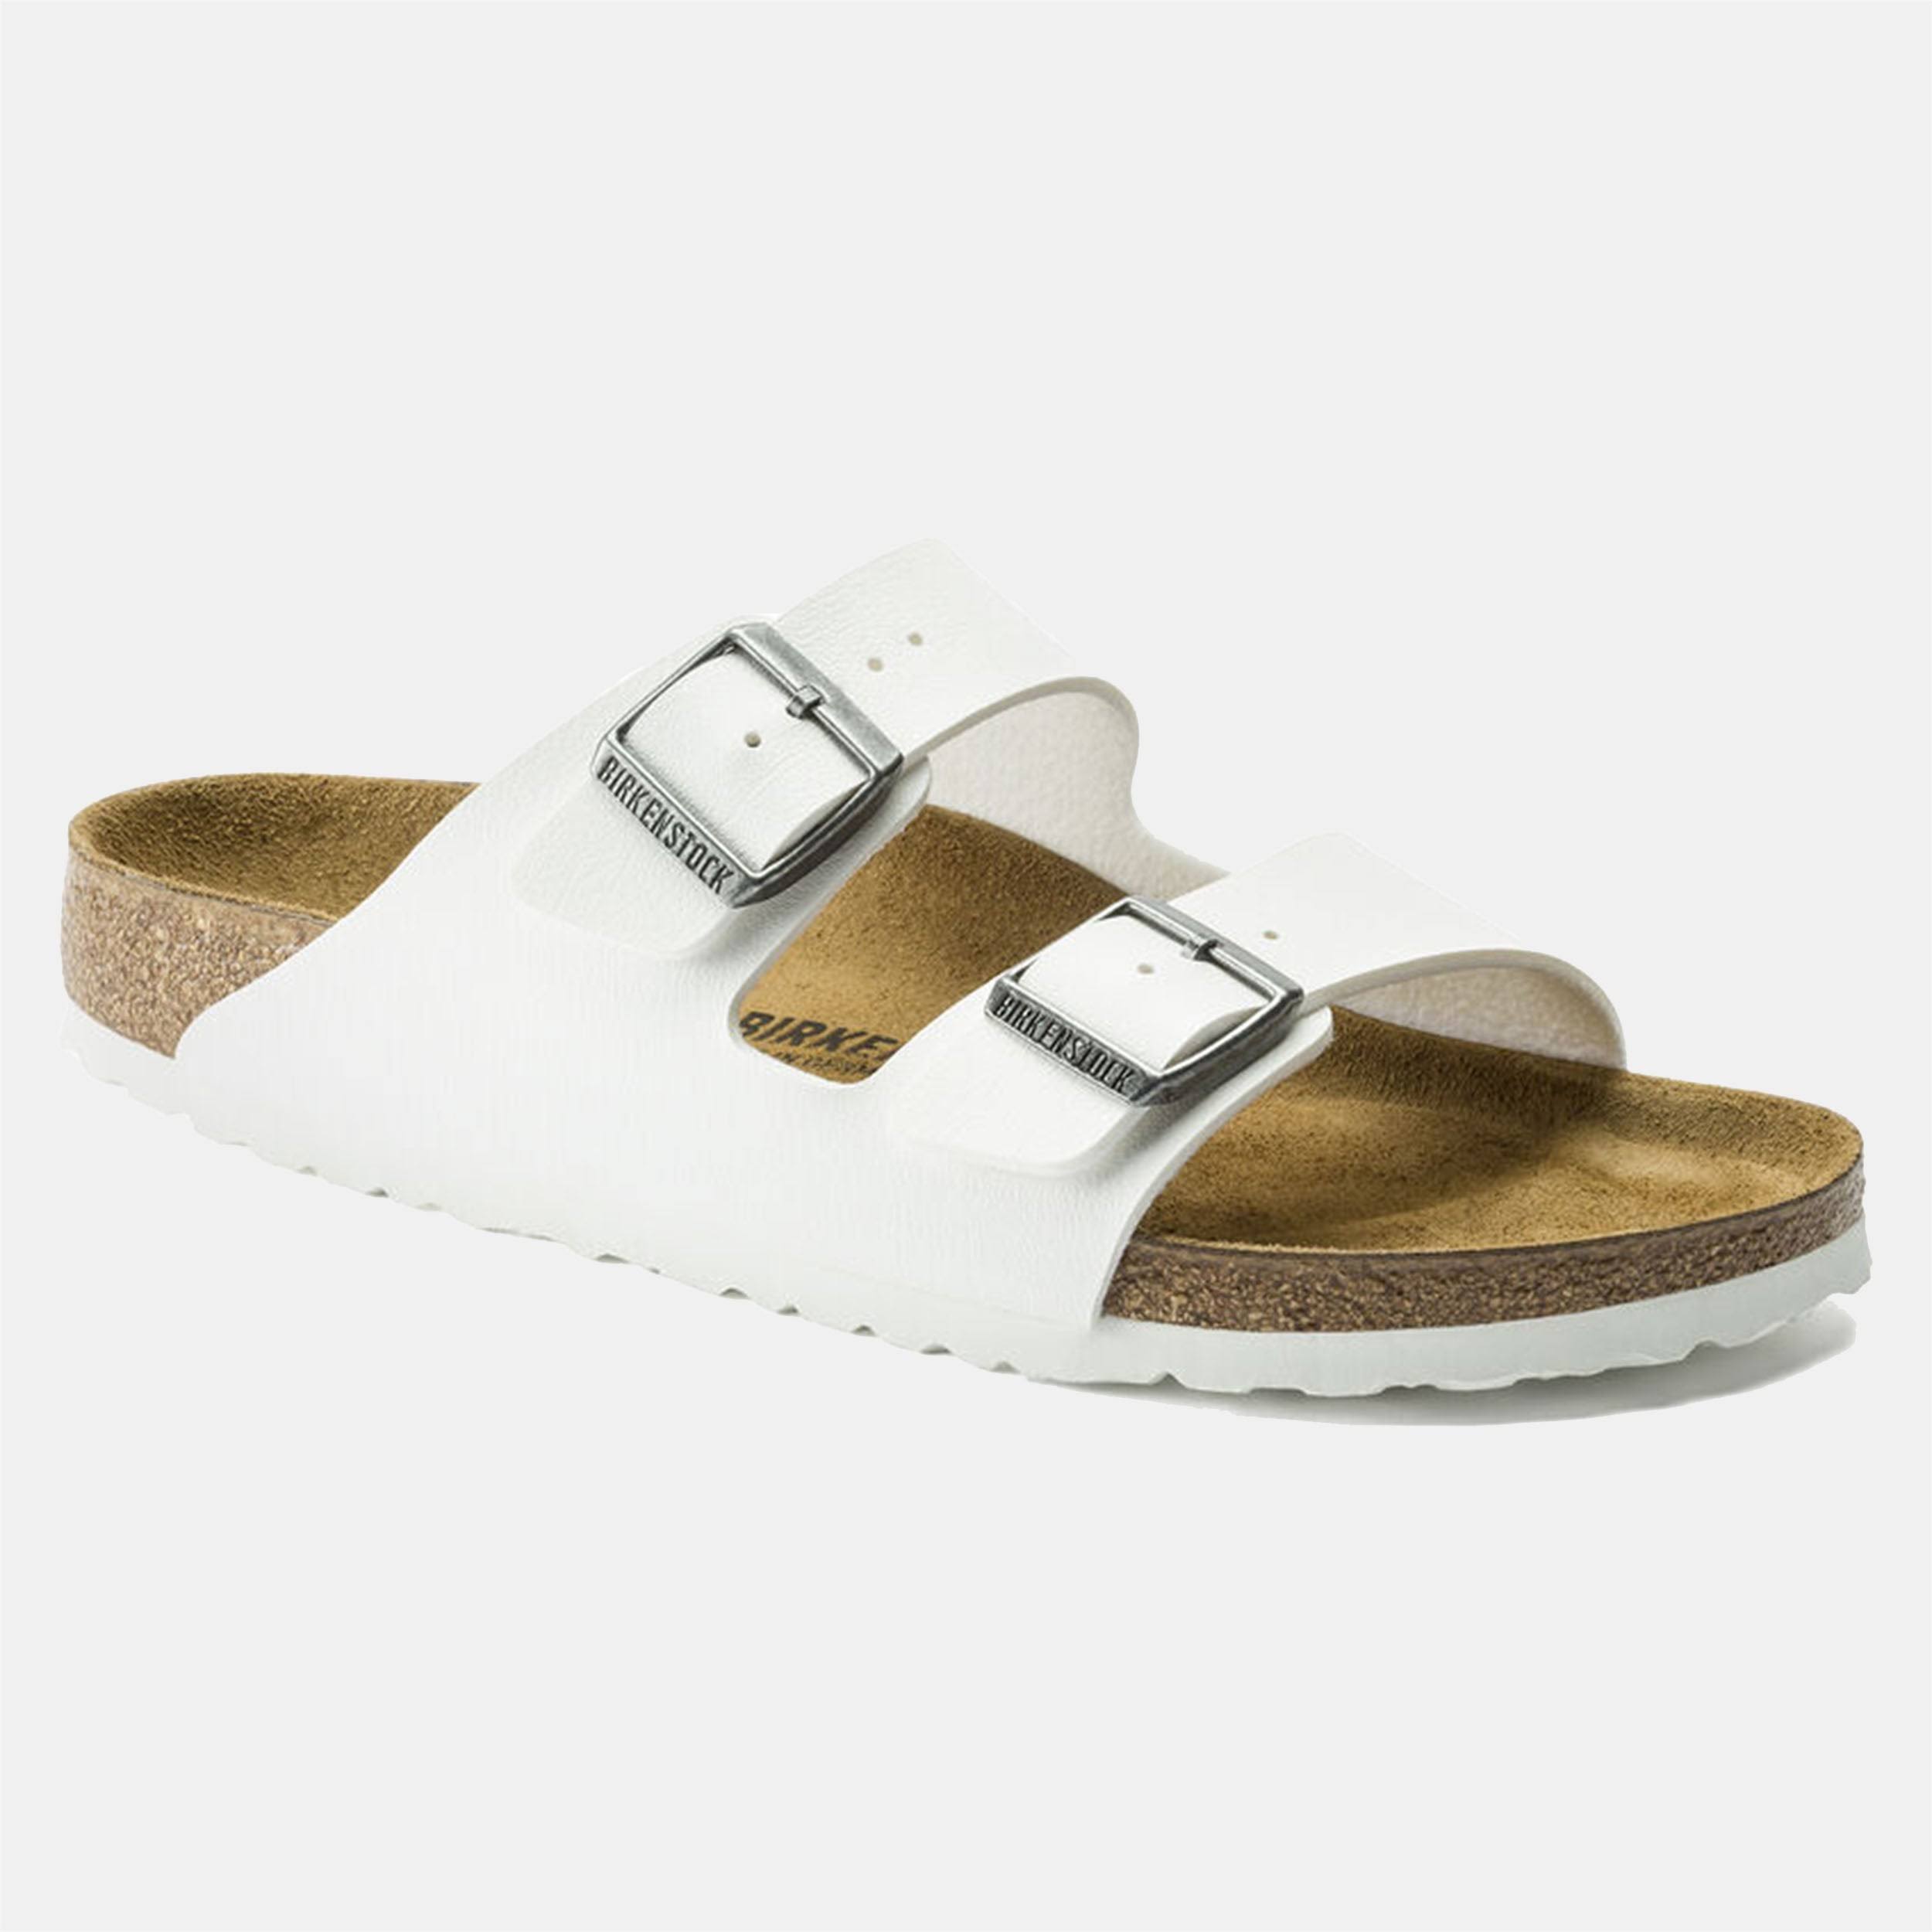 Birkenstock Arizona Birko-flor Sandals Slippers - White, Size 8 US